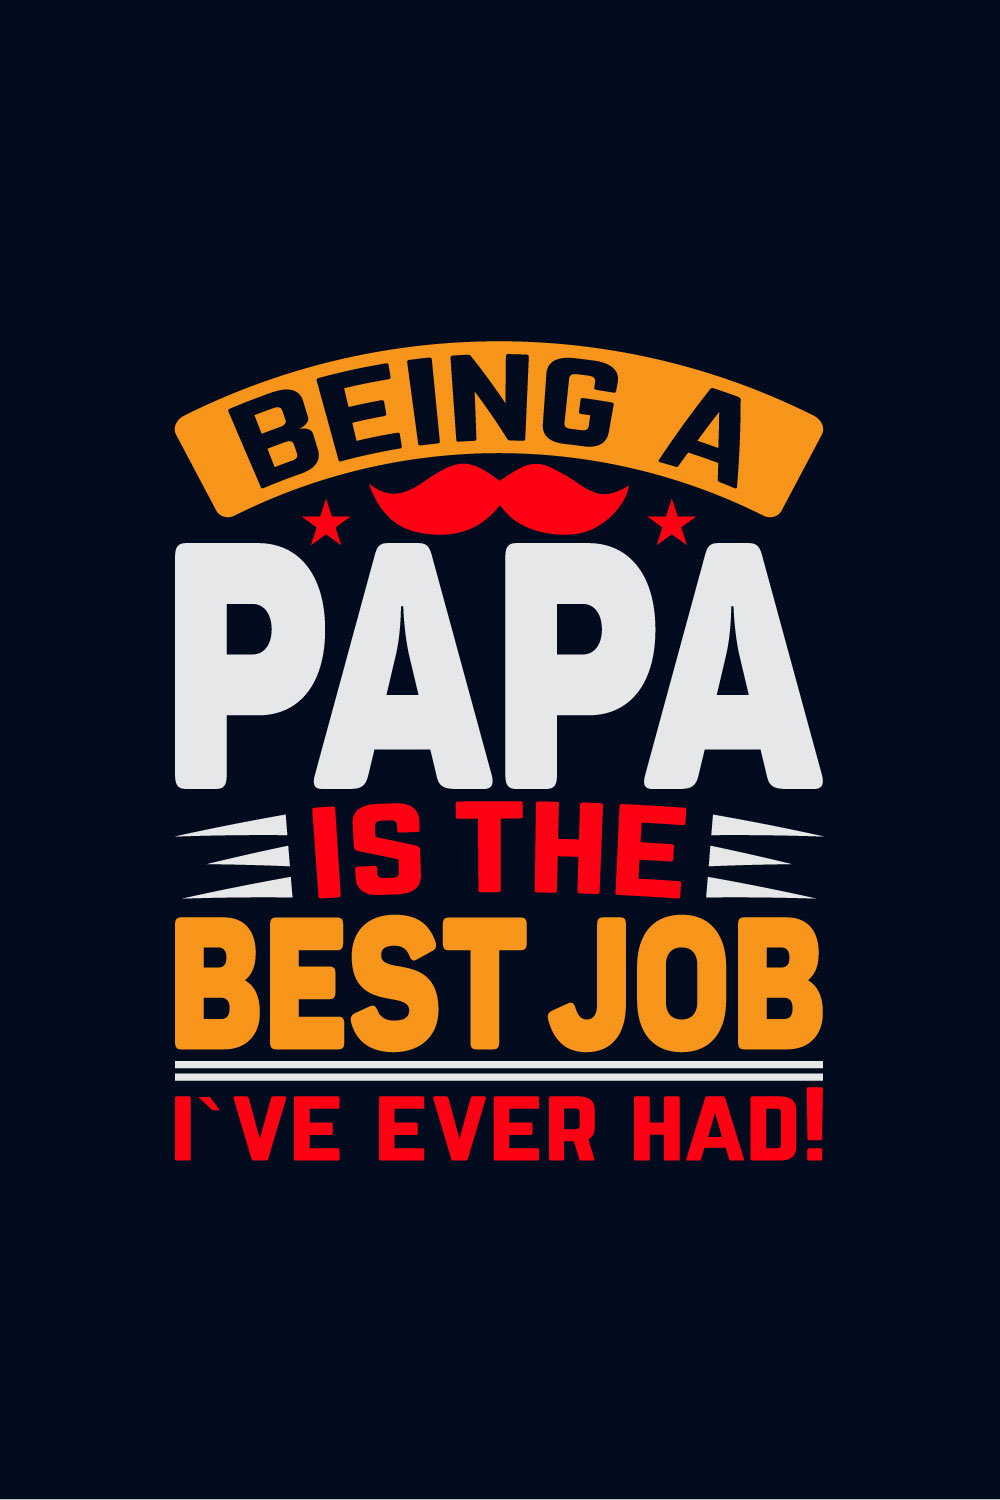 Papa Typography T-shirt Design Pinterest image.